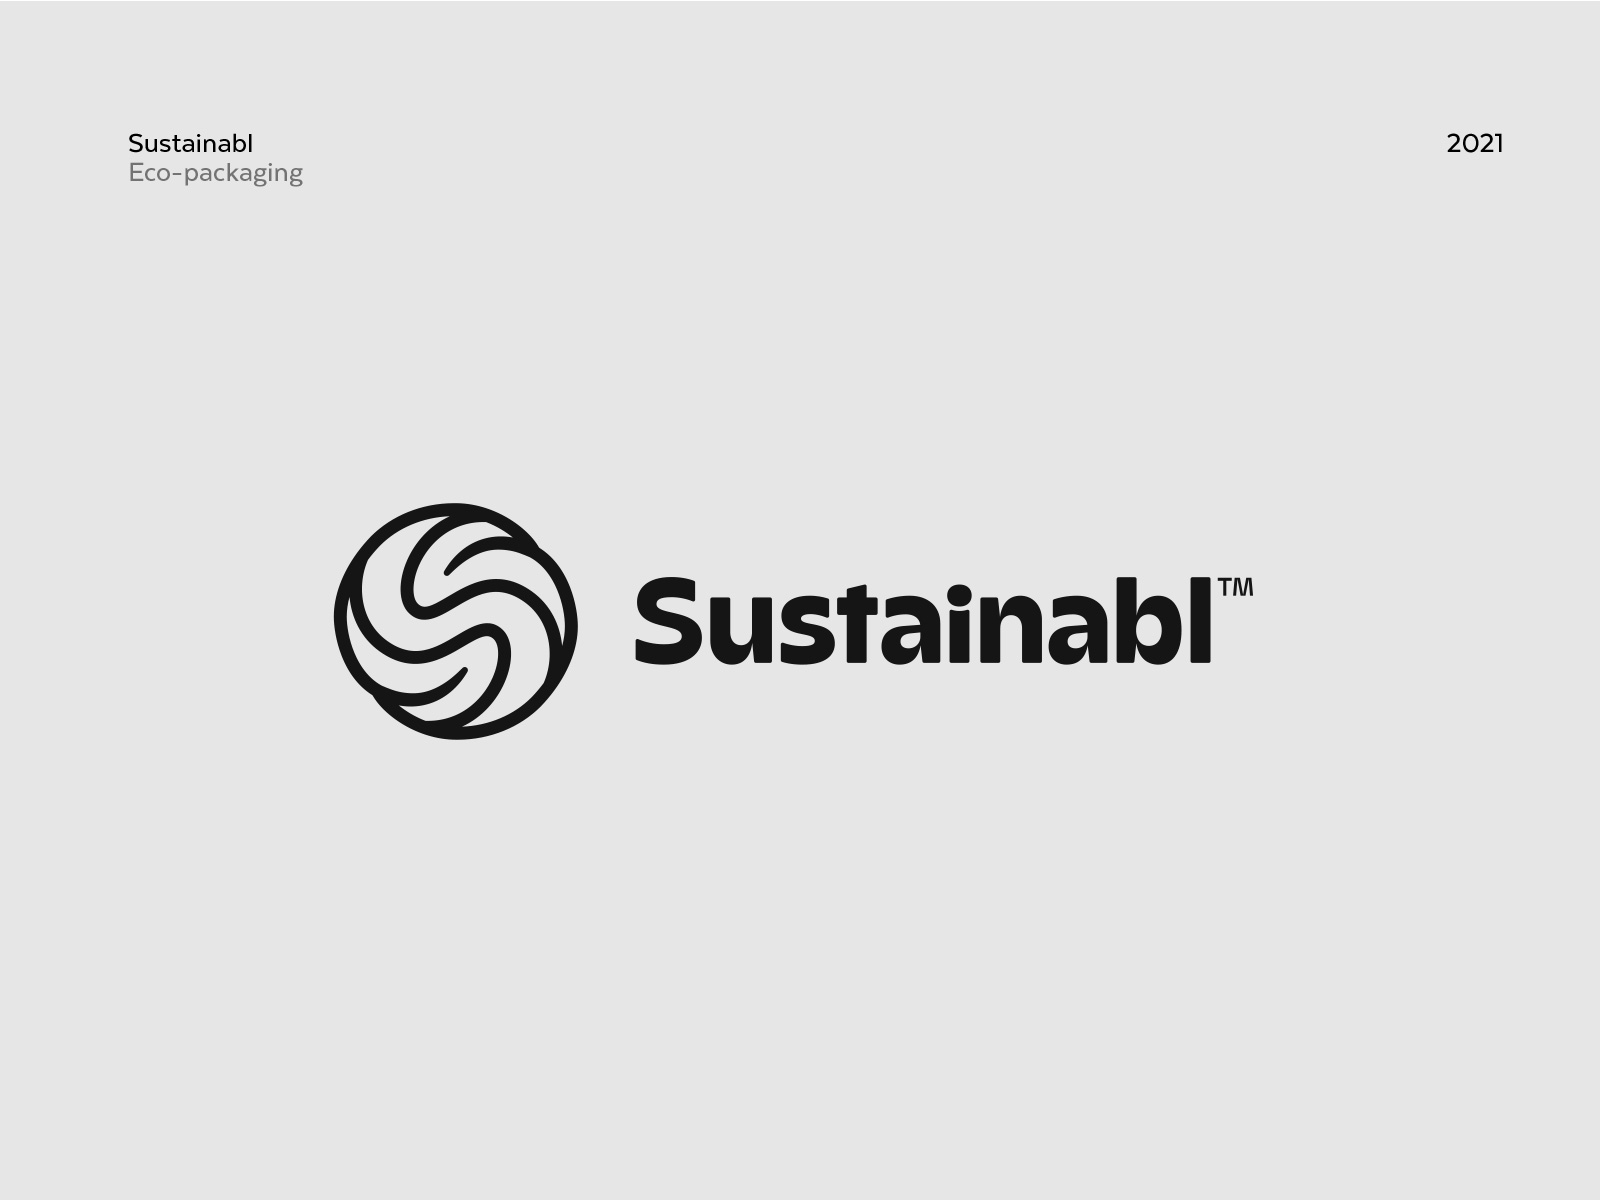 Sustainabl logo by Caspian Ievers on Dribbble